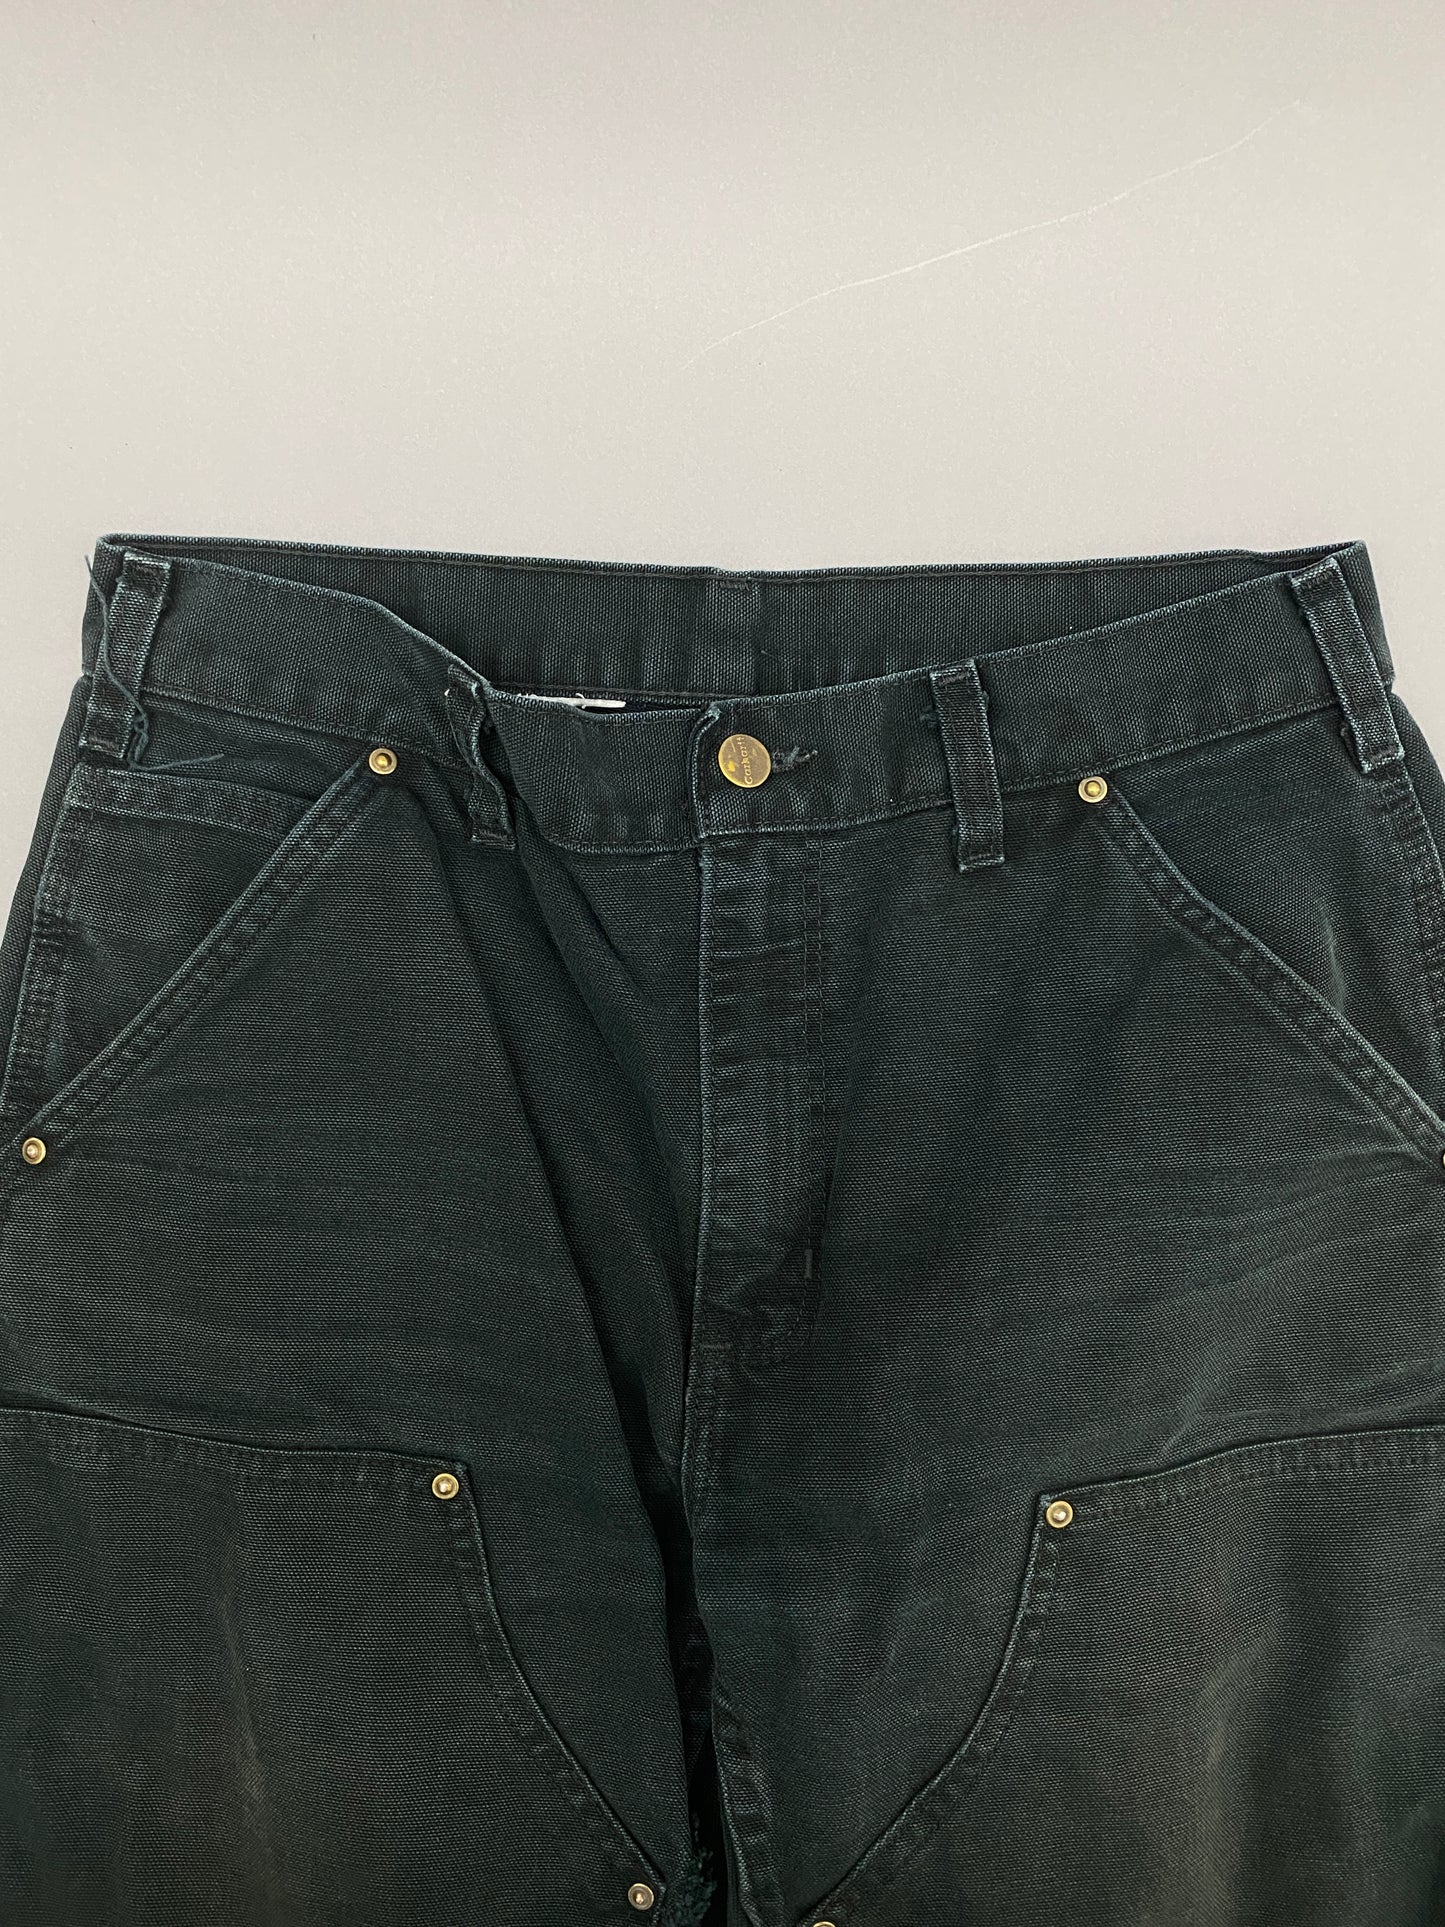 Double Knee Carhartt Jeans Vintage - 30 x 30